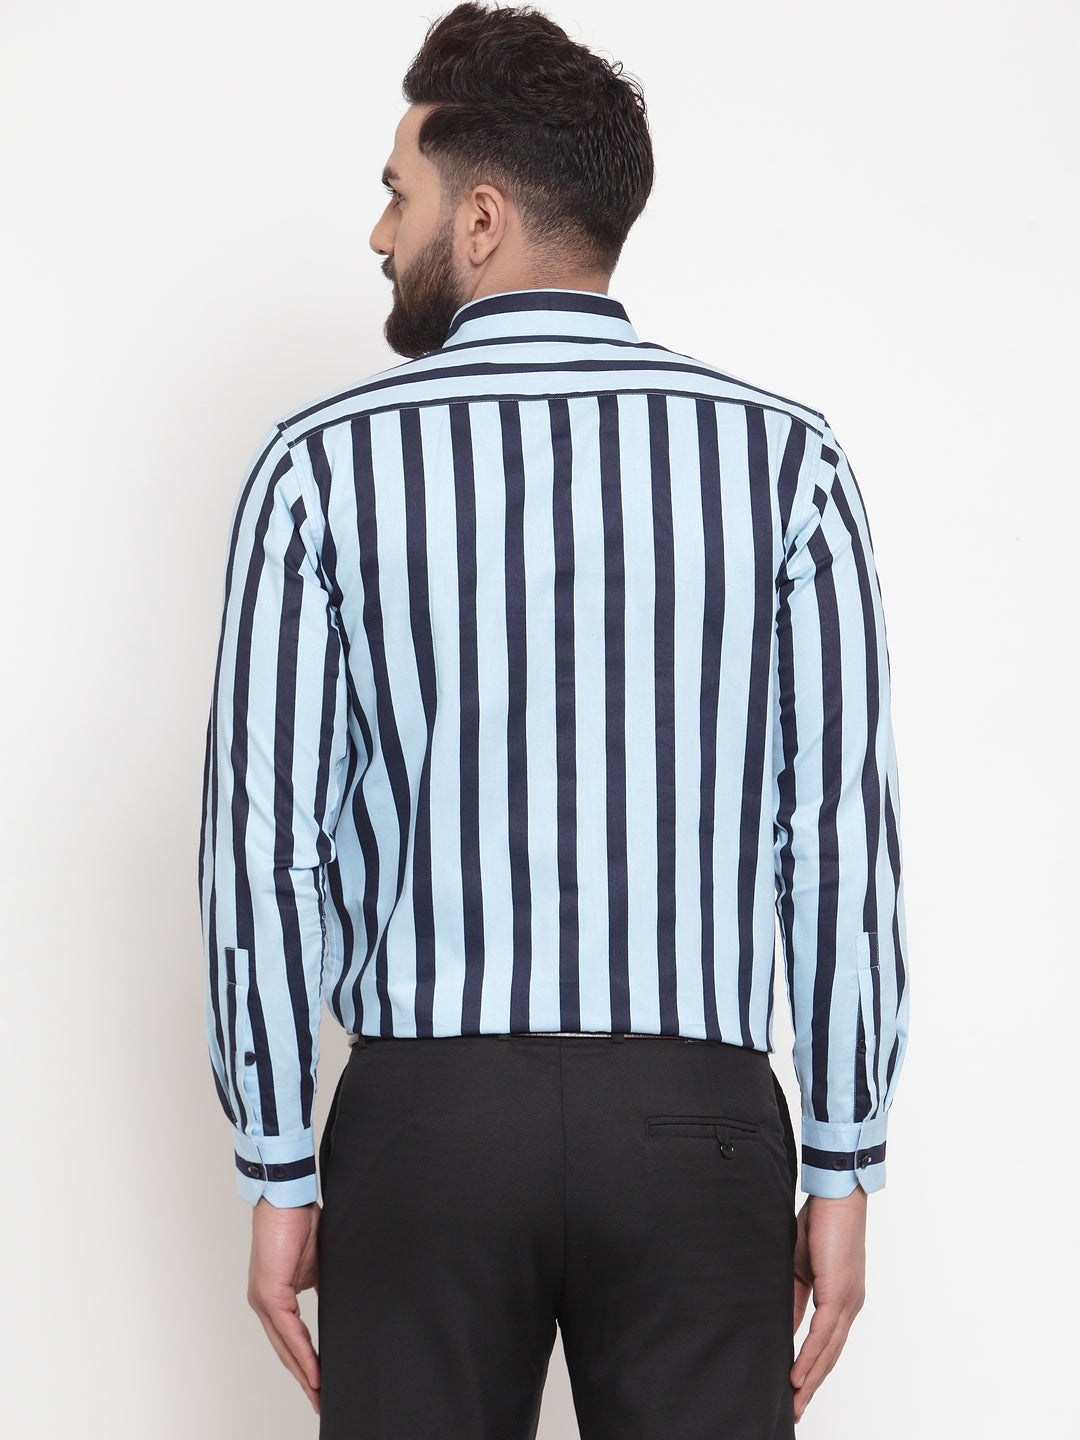 Men's Blue Cotton Striped Formal Shirts ( SF 744Sky ) - Jainish